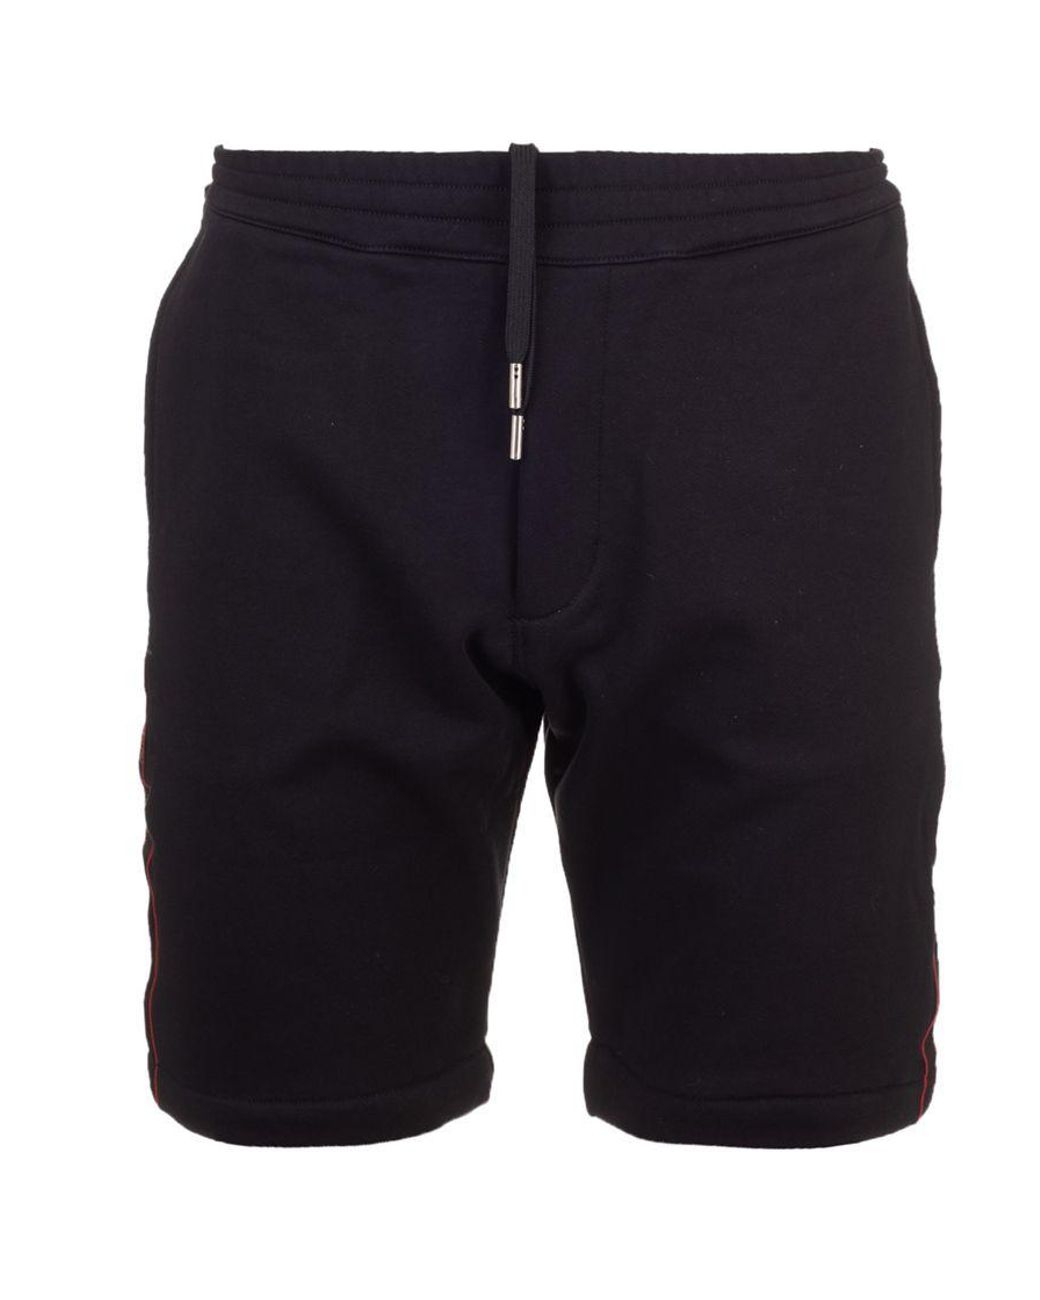 Alexander McQueen Cotton Shorts in Black for Men - Lyst